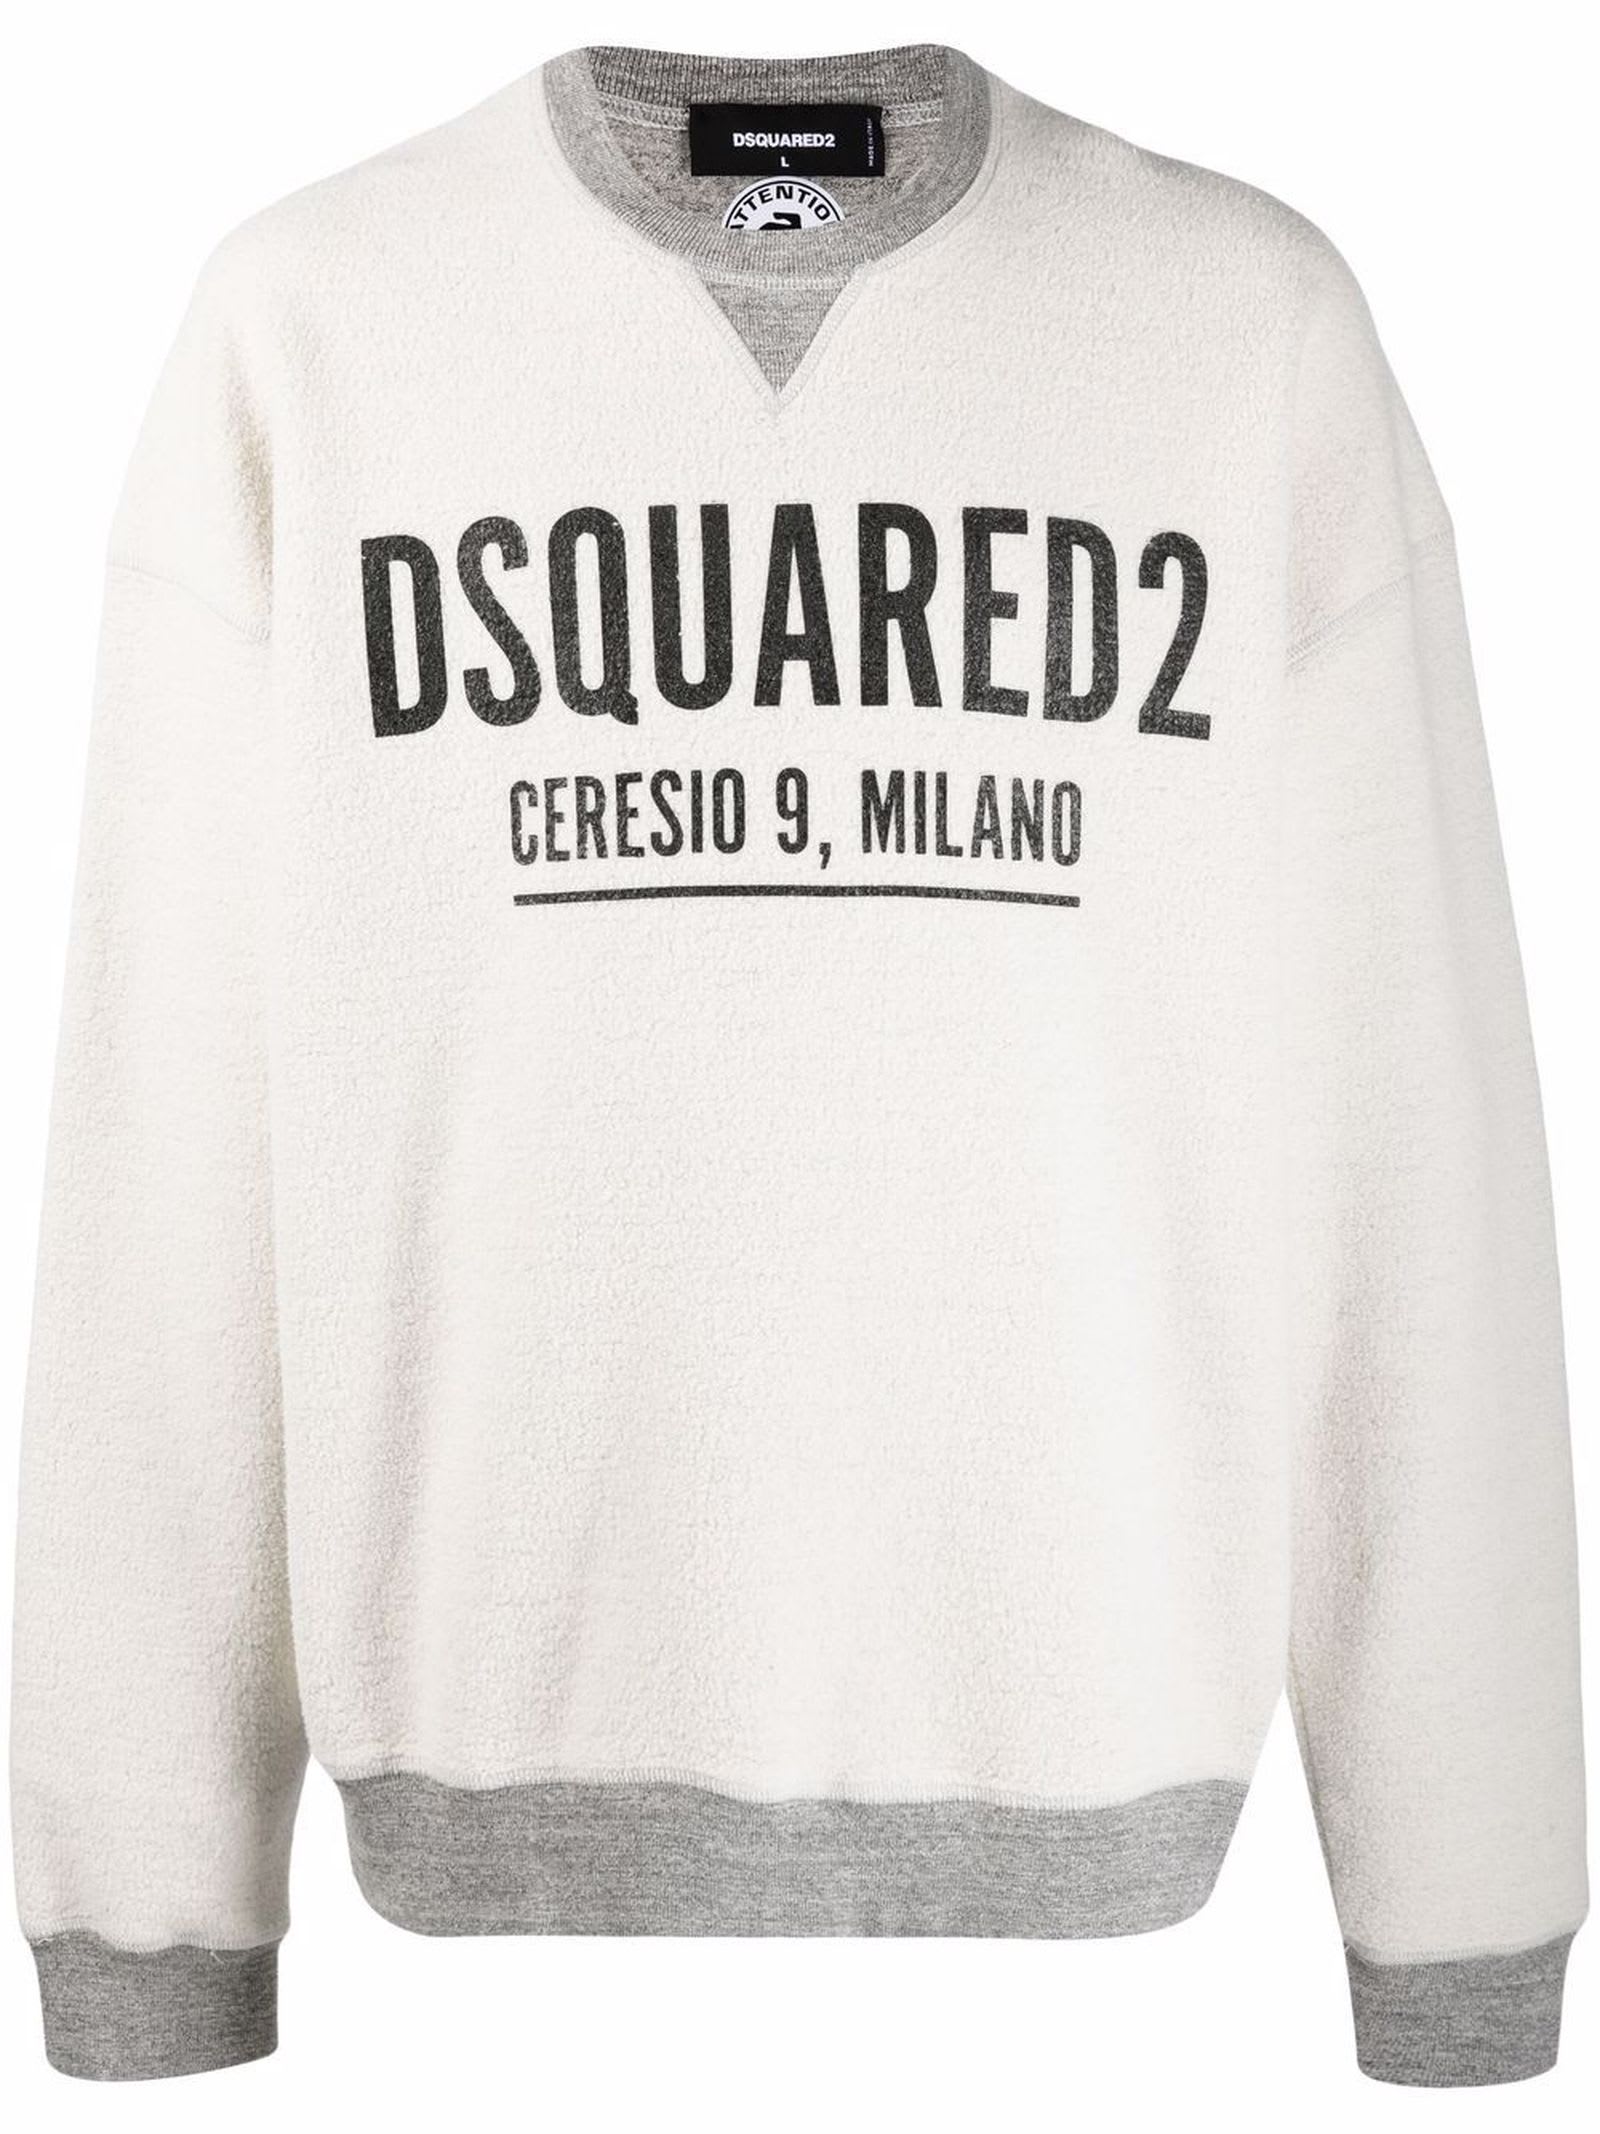 Dsquared2 Grey Cotton Crew Neck Sweater